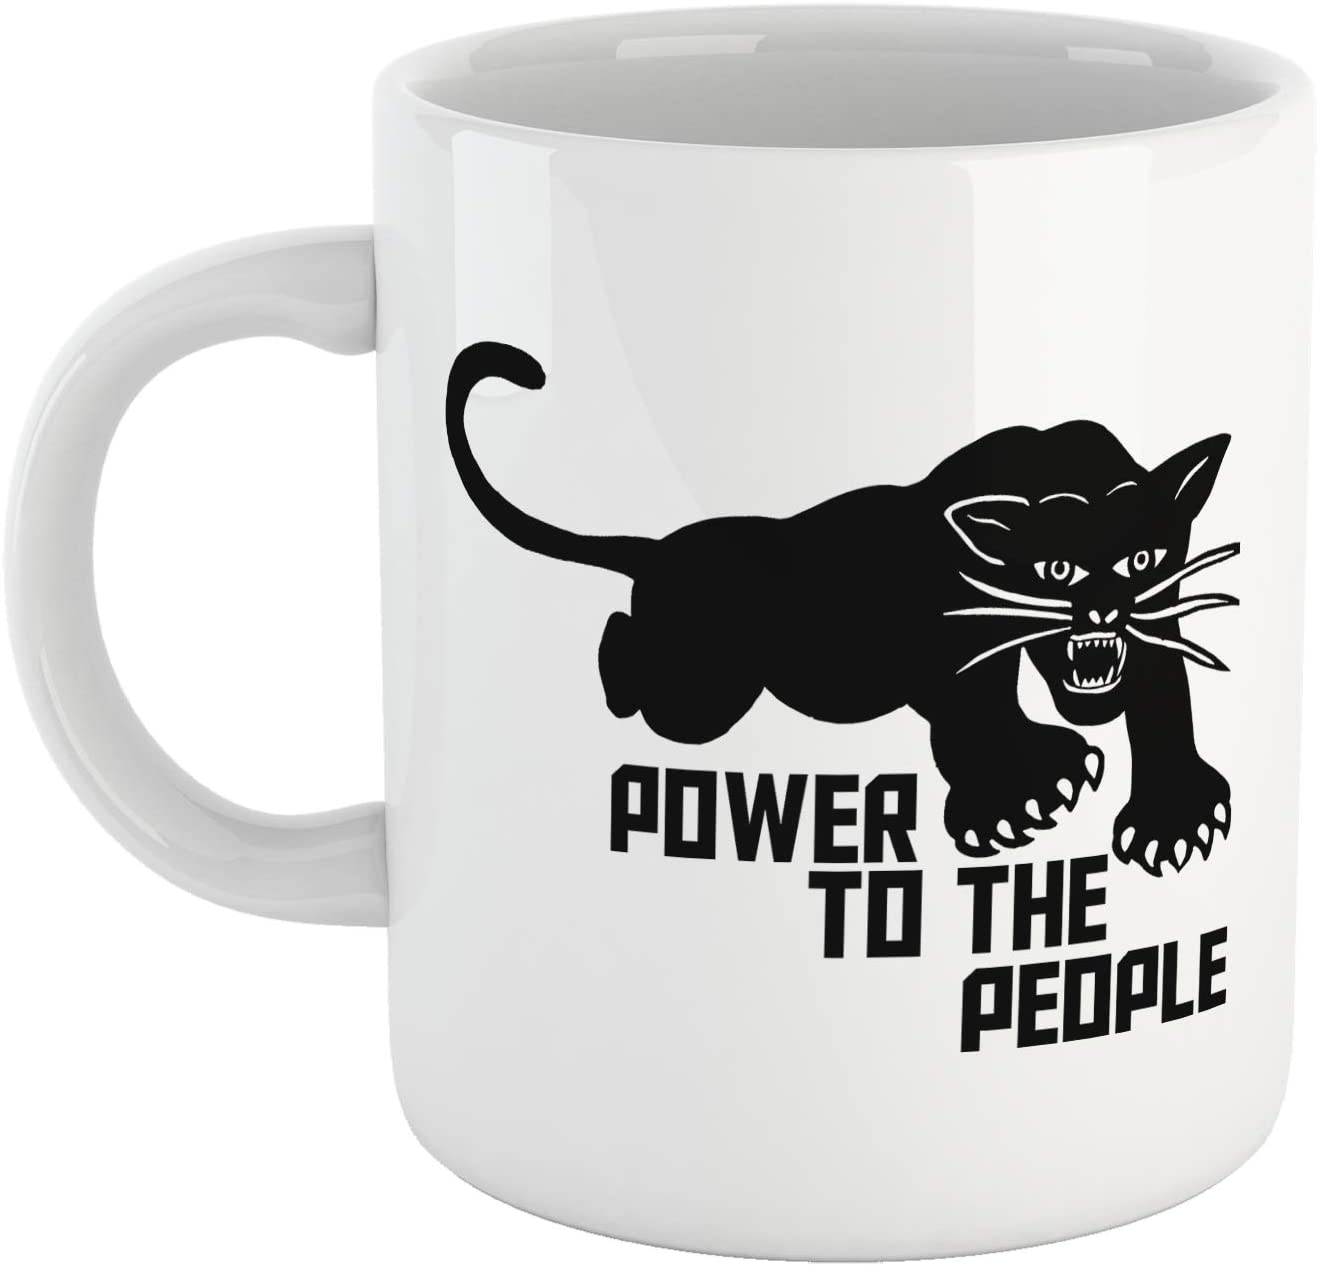 Black Tazza Power to The People - Movimento politoco Black Panter - Choose ur Color Cuc shop